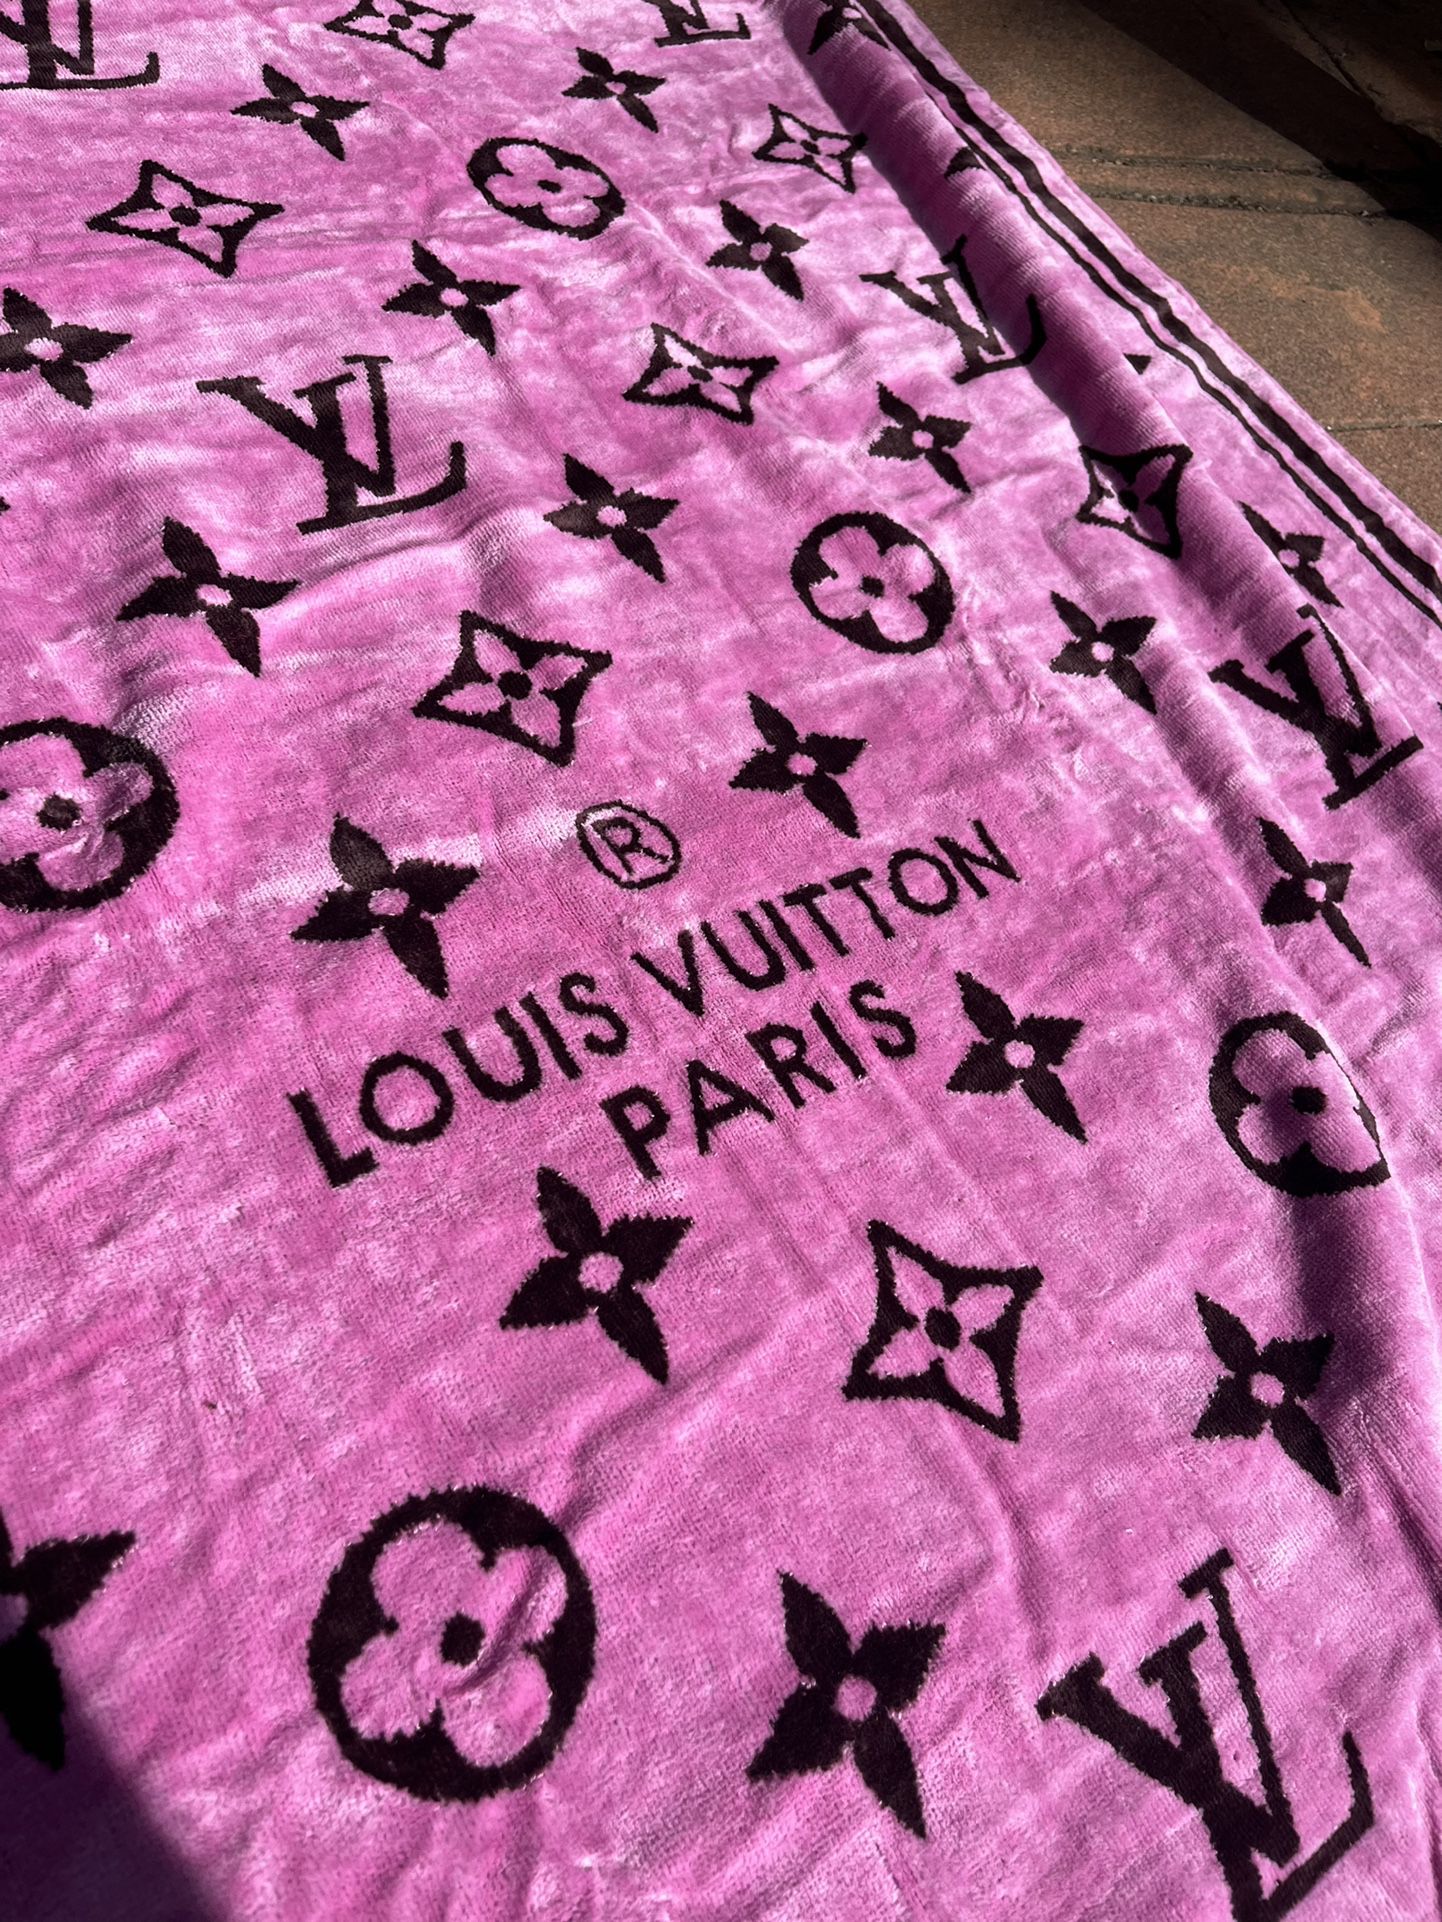 Louis Vuitton Beach Towel for Sale in Fontana, CA - OfferUp